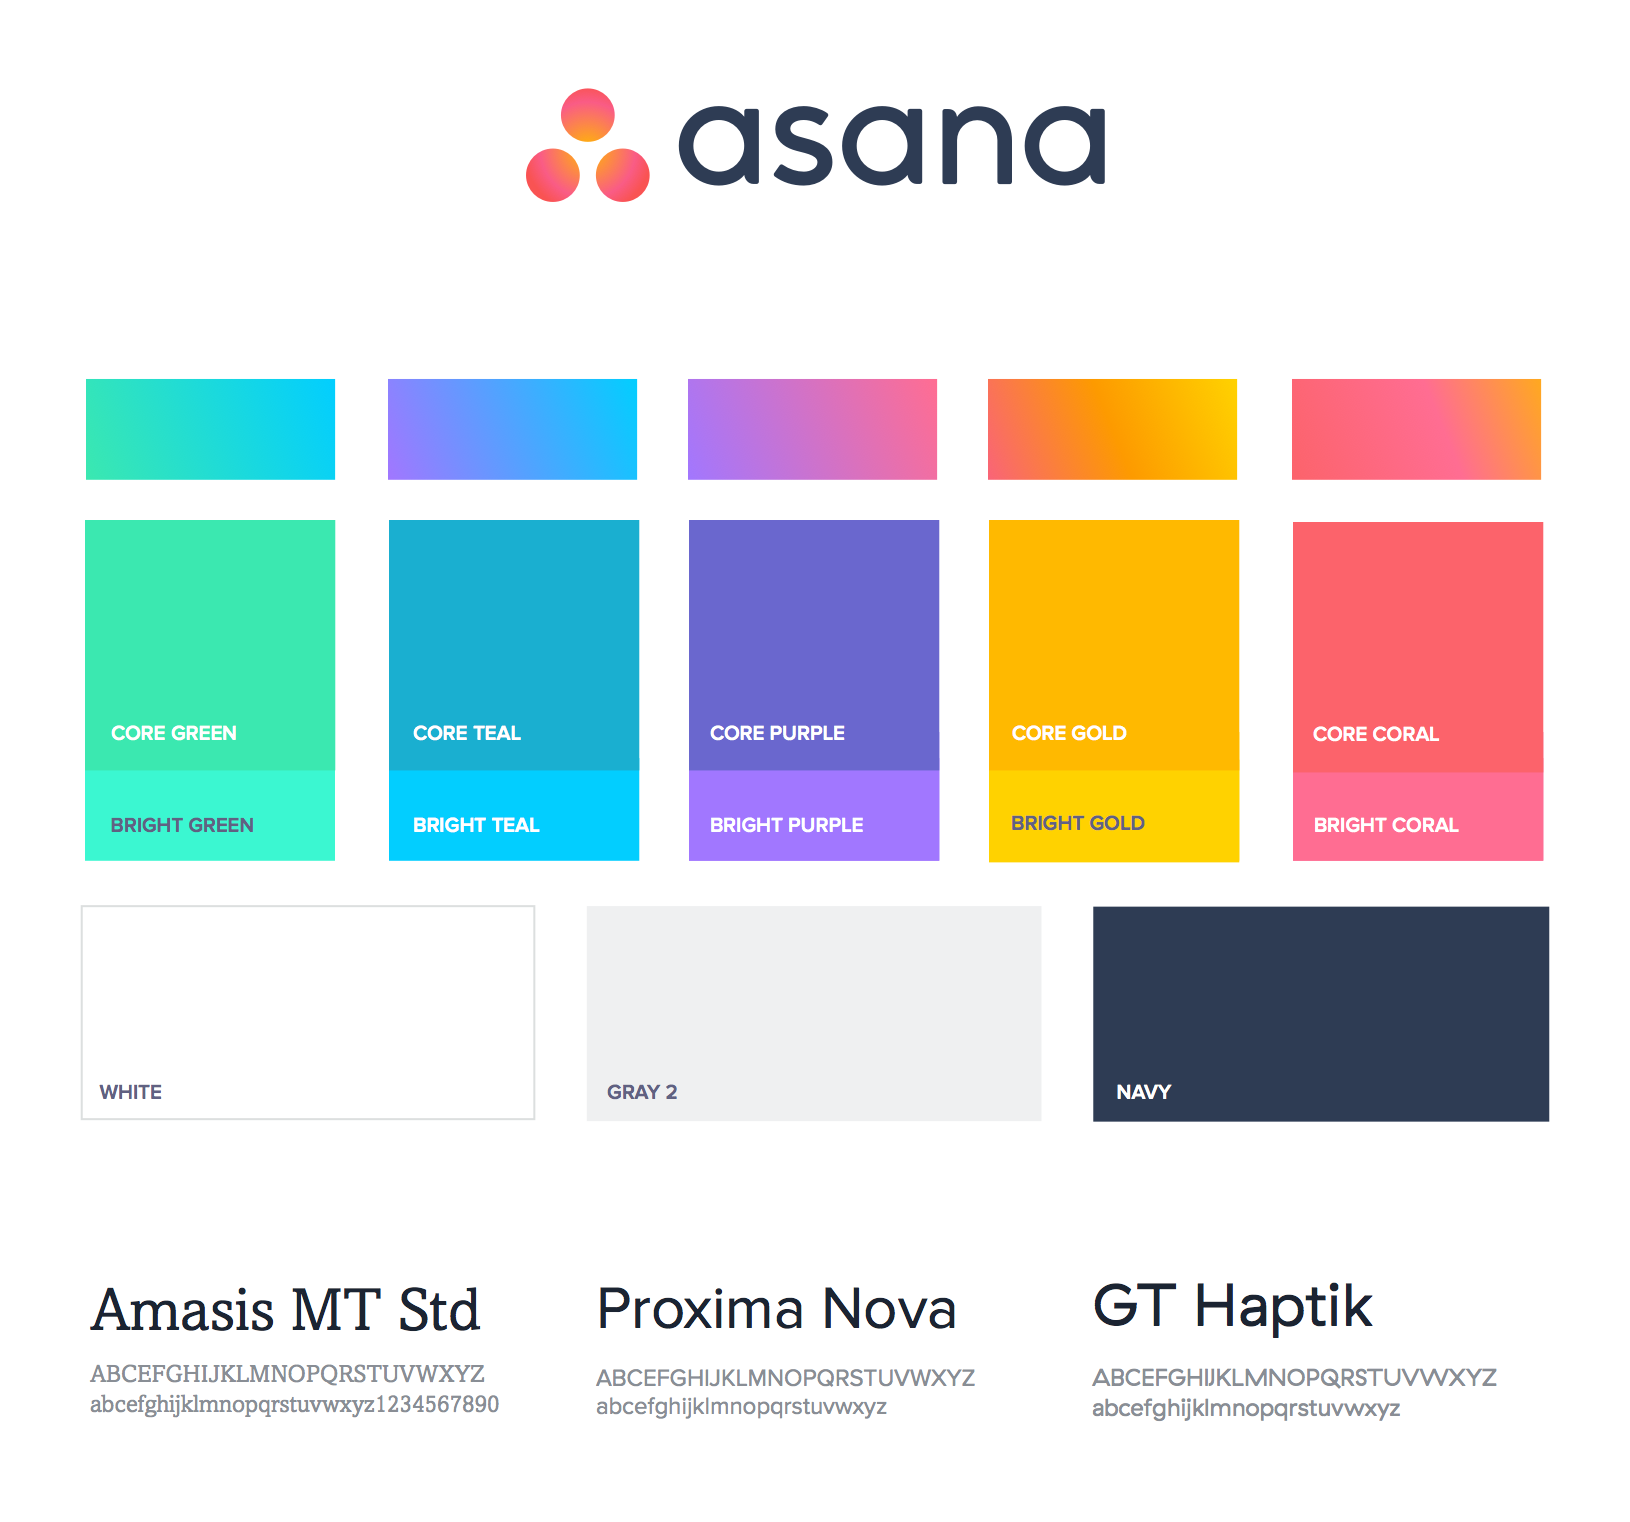 Asana Brand Overview